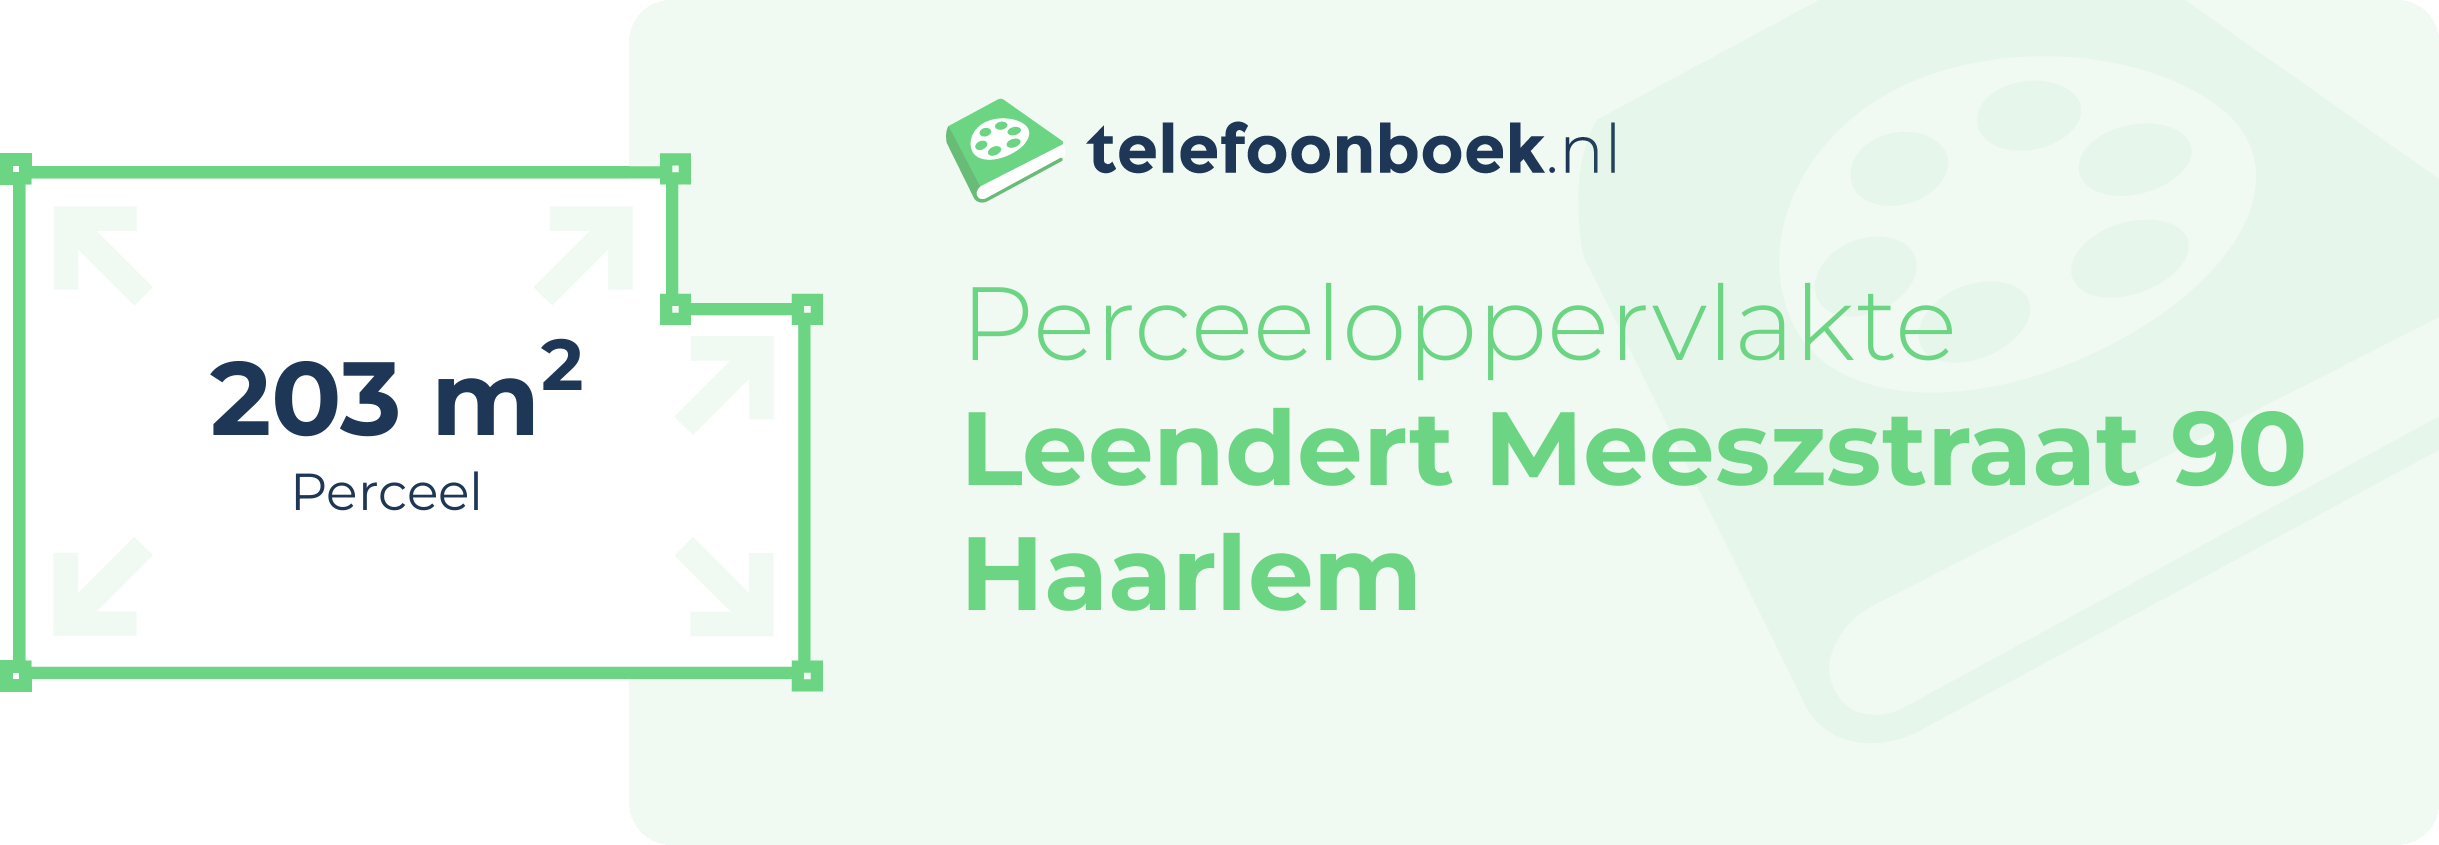 Perceeloppervlakte Leendert Meeszstraat 90 Haarlem